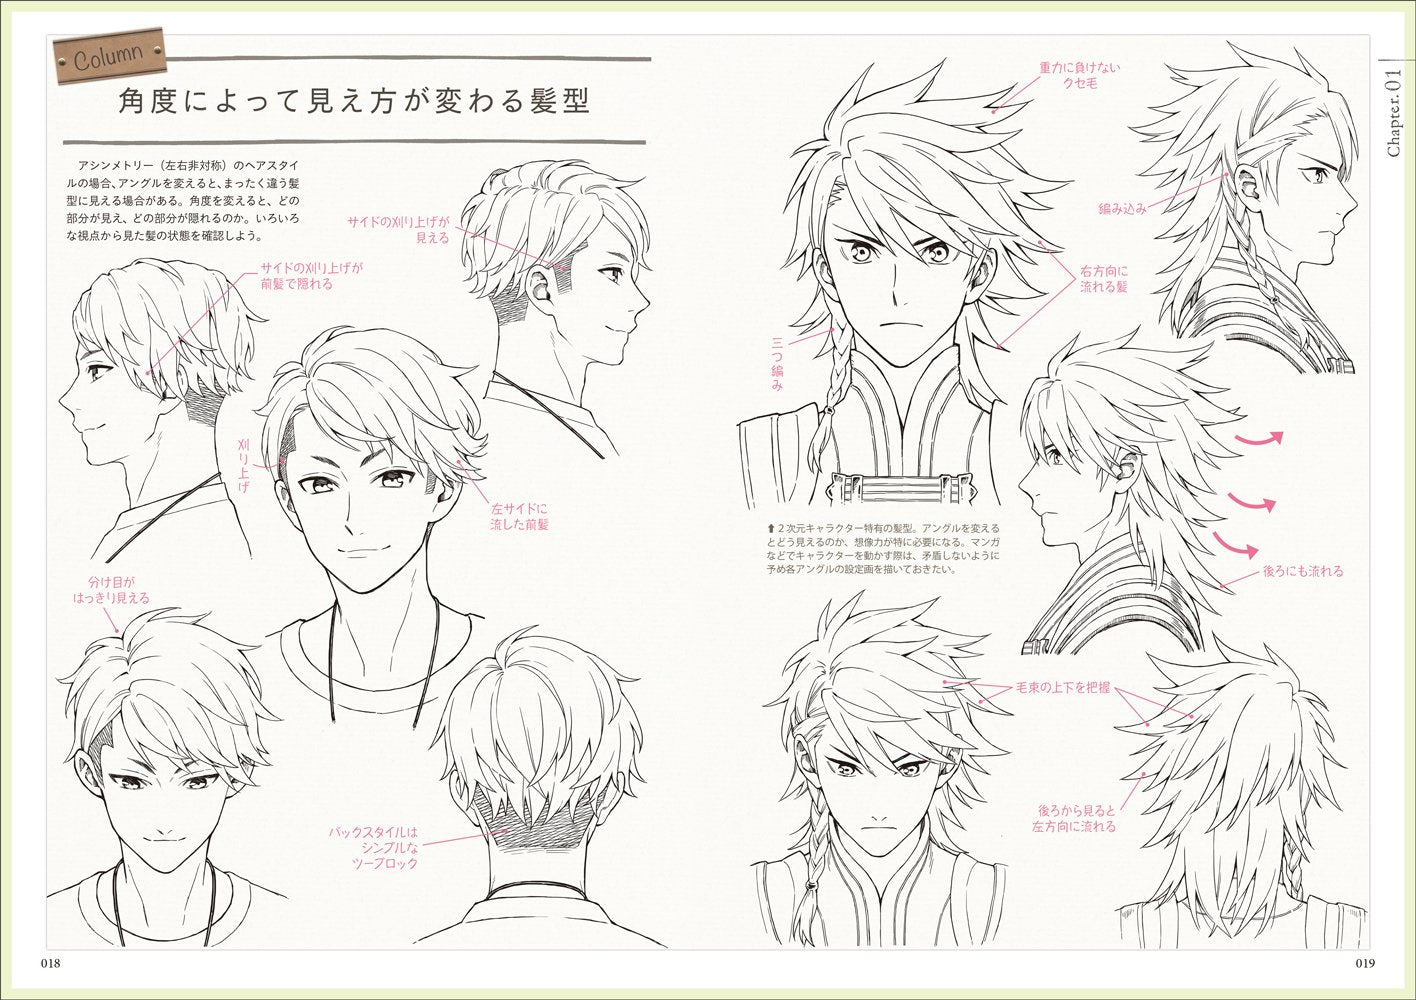 Hair data in Japanese hair magazines | by John Kueh | HairAlbum | Medium